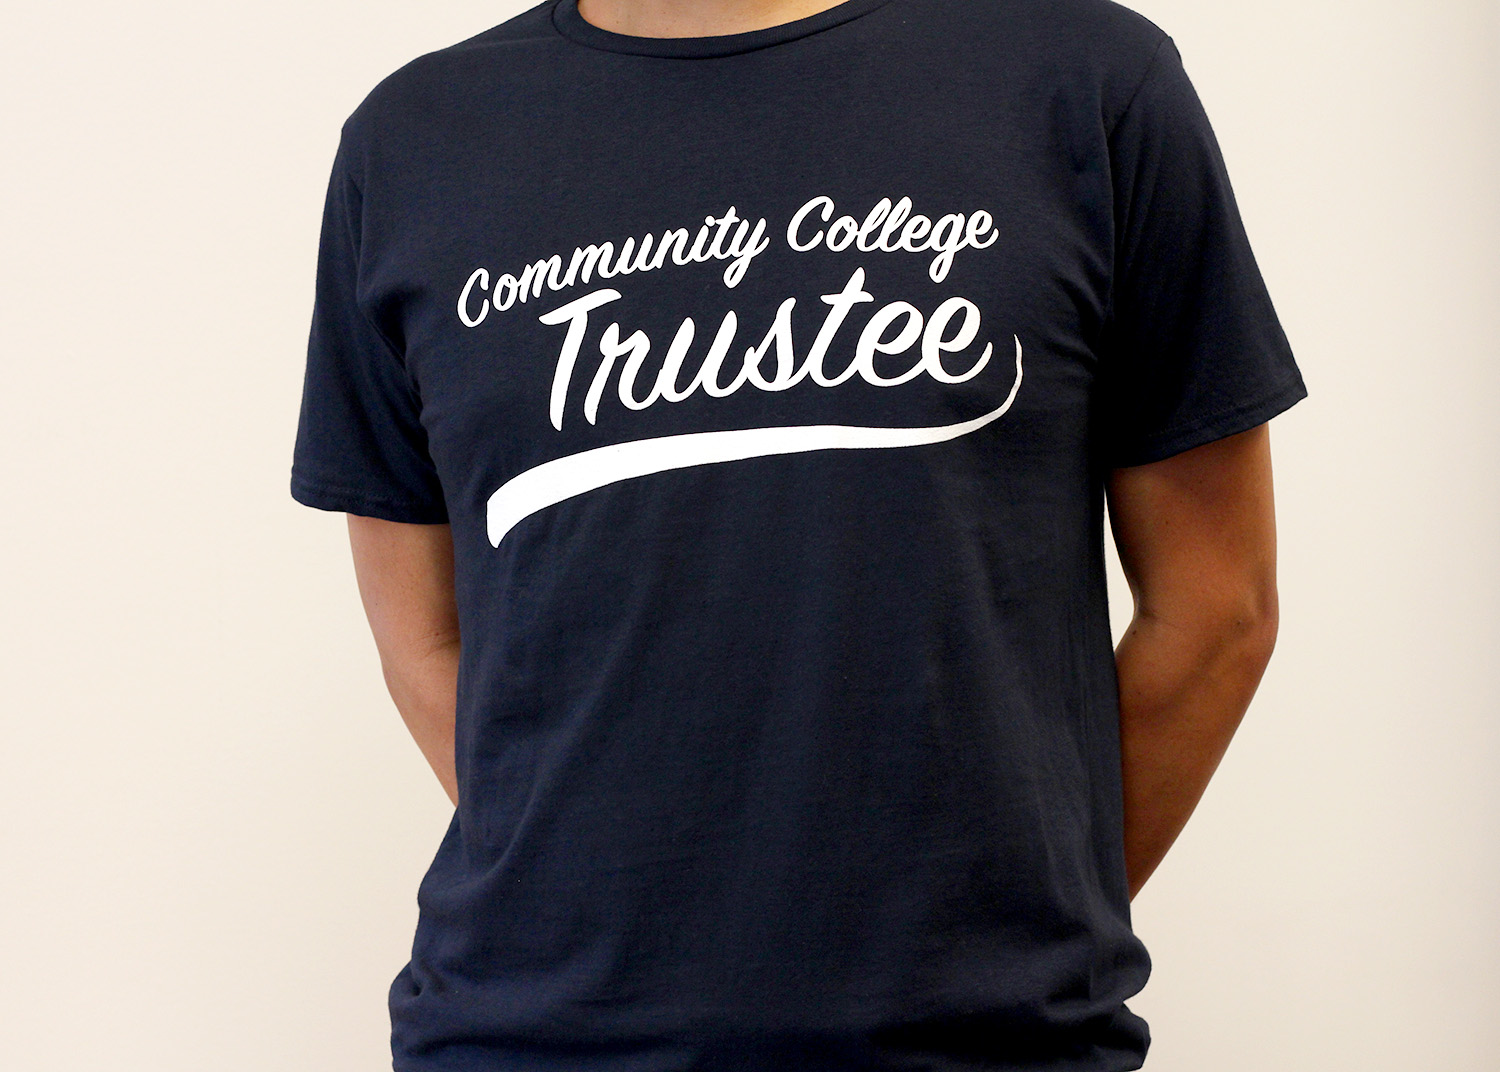 Unisex ACCT Community College Trustee Tee Shirt - Size M